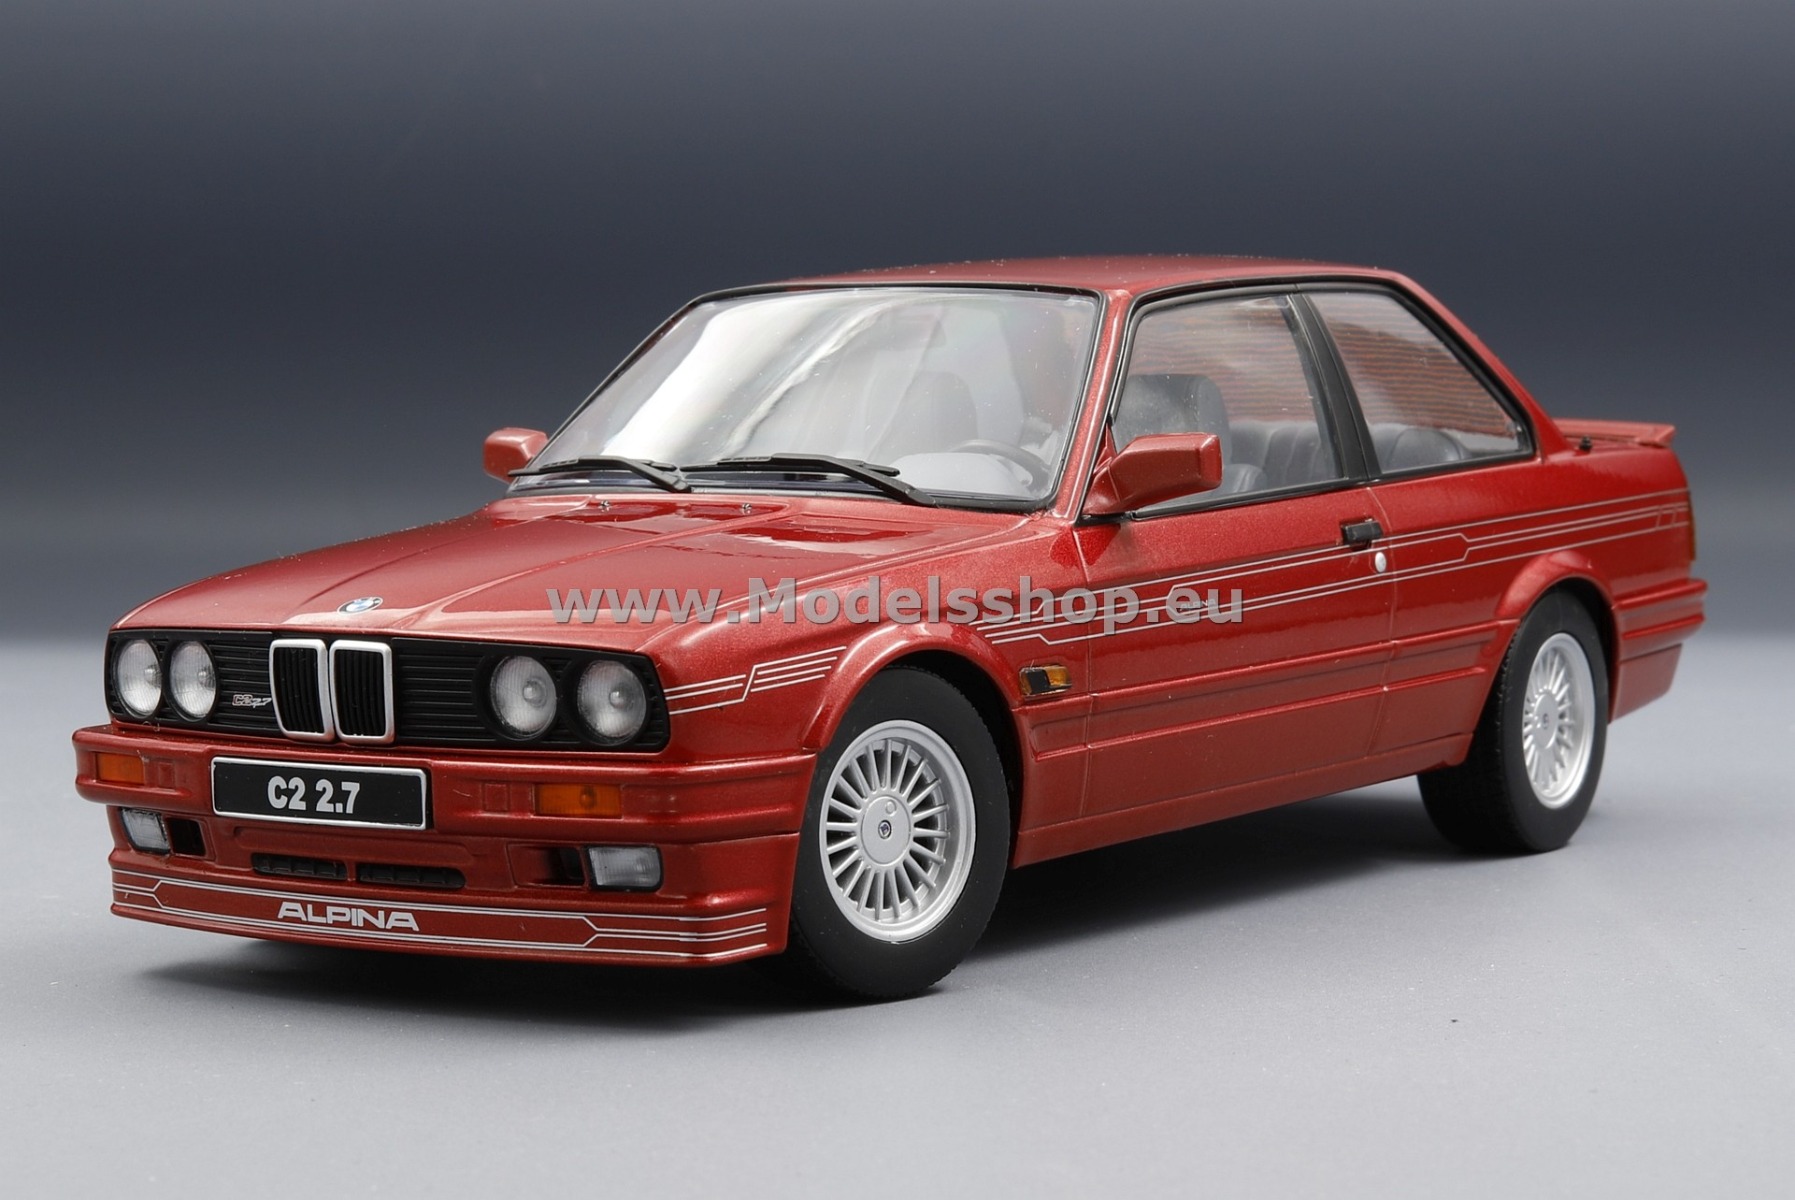 BMW Alpina C2 2.7 E30, 1988 /red - metallic/